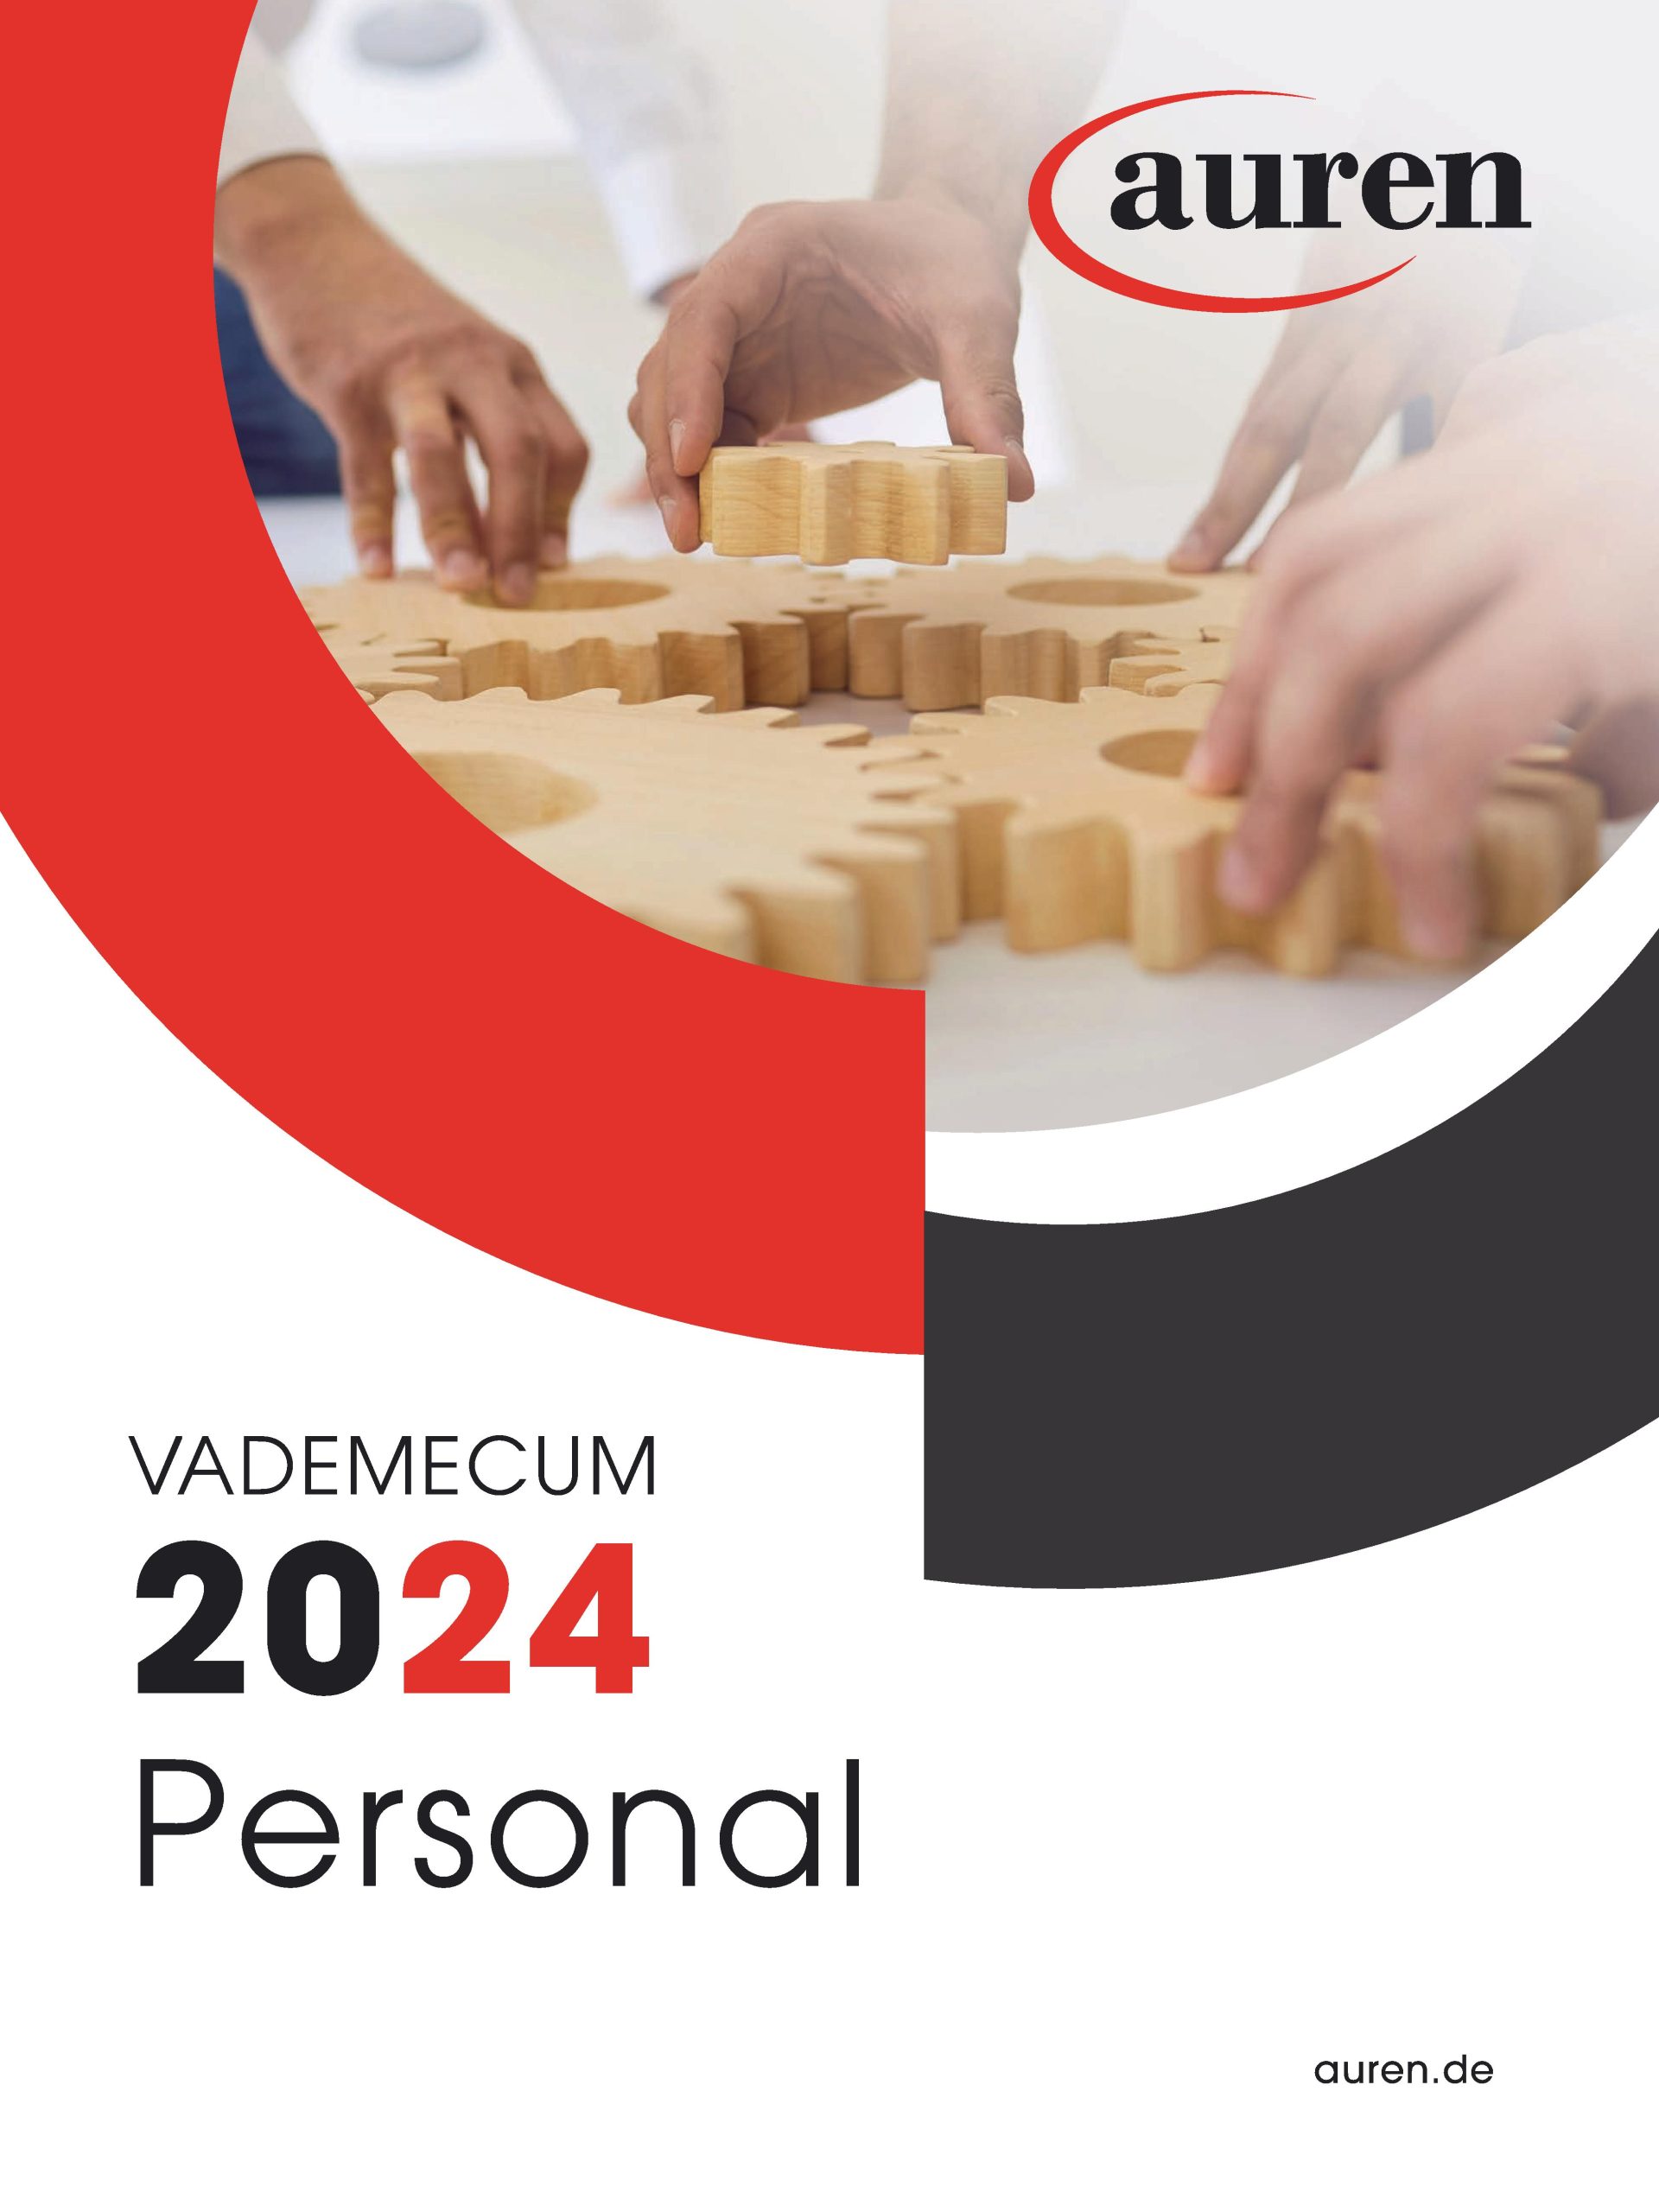 Vademecum 2024 Personal